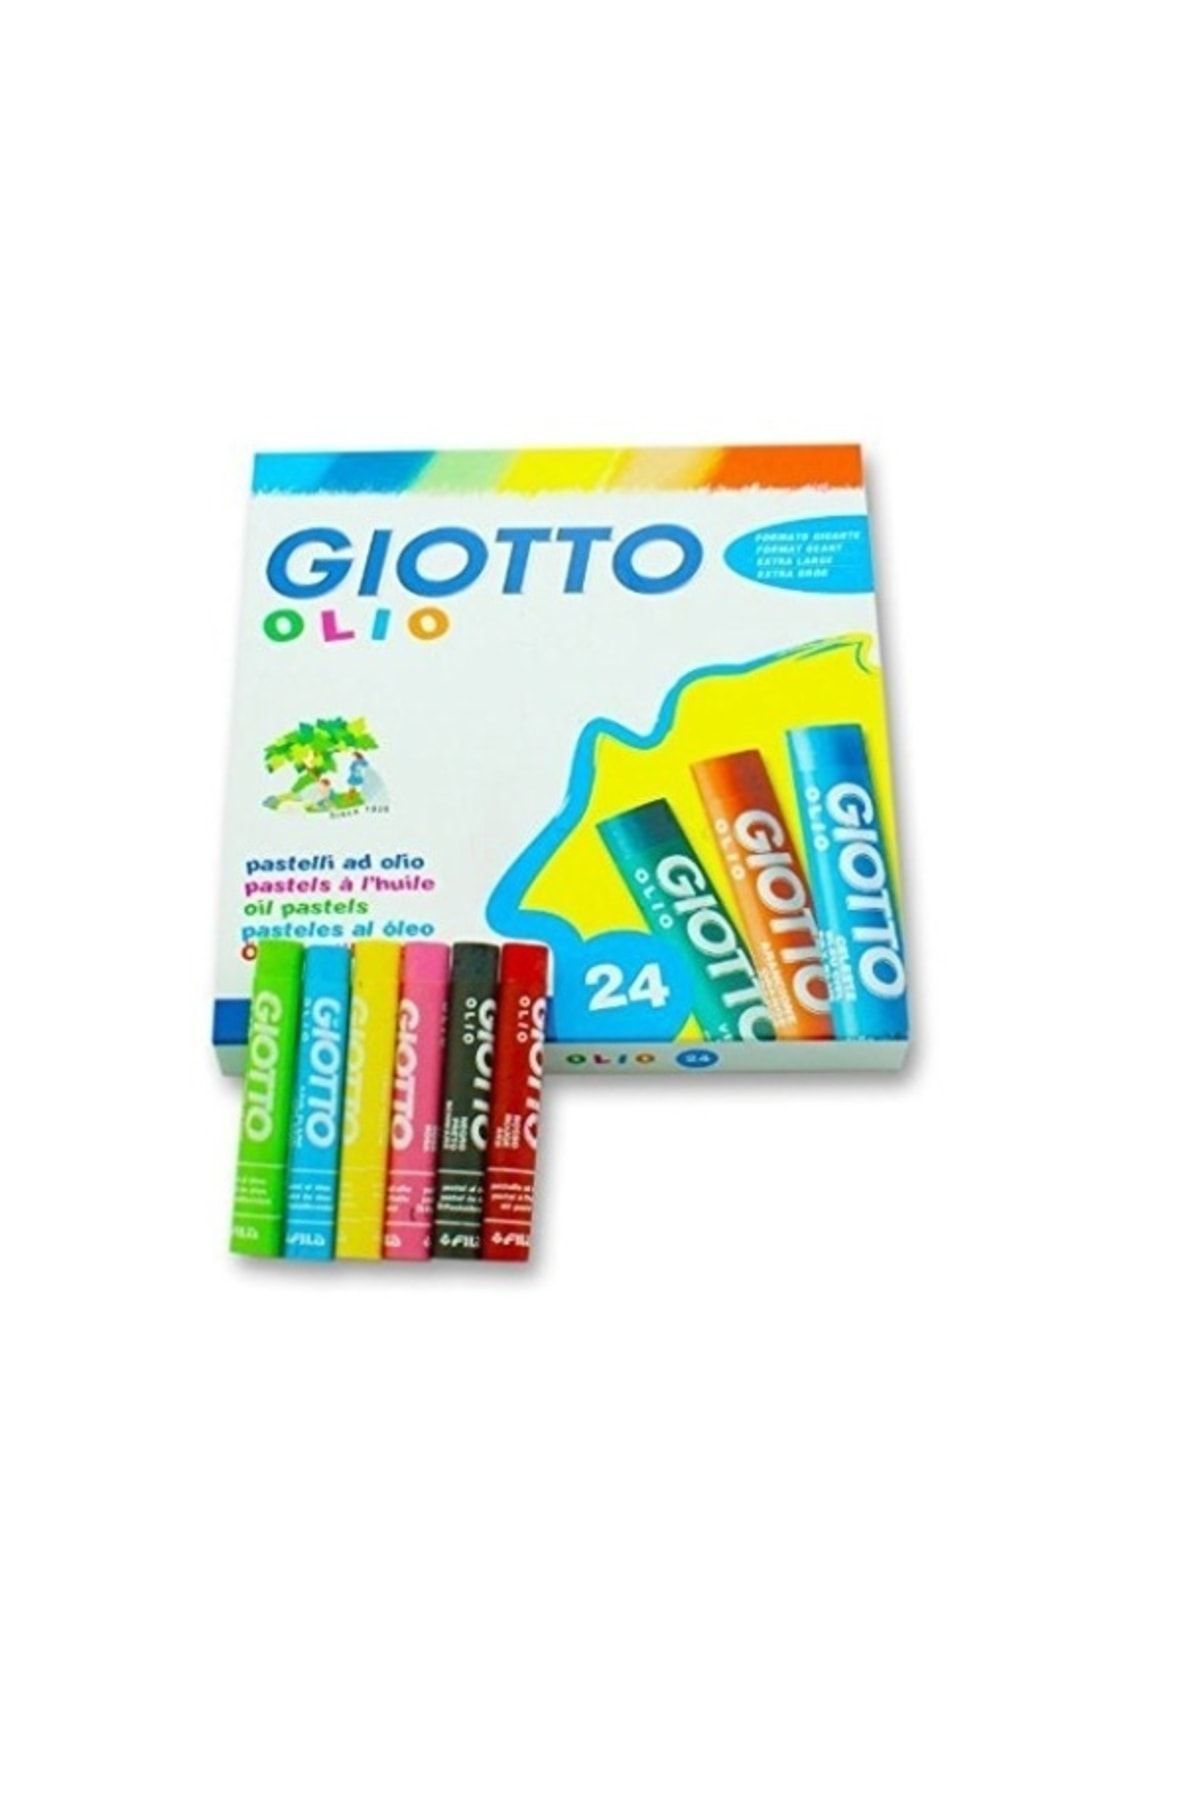 Giotto Olio Yağlı Pastel Boya Silindir 24 Renk Karton Kutu (293100)